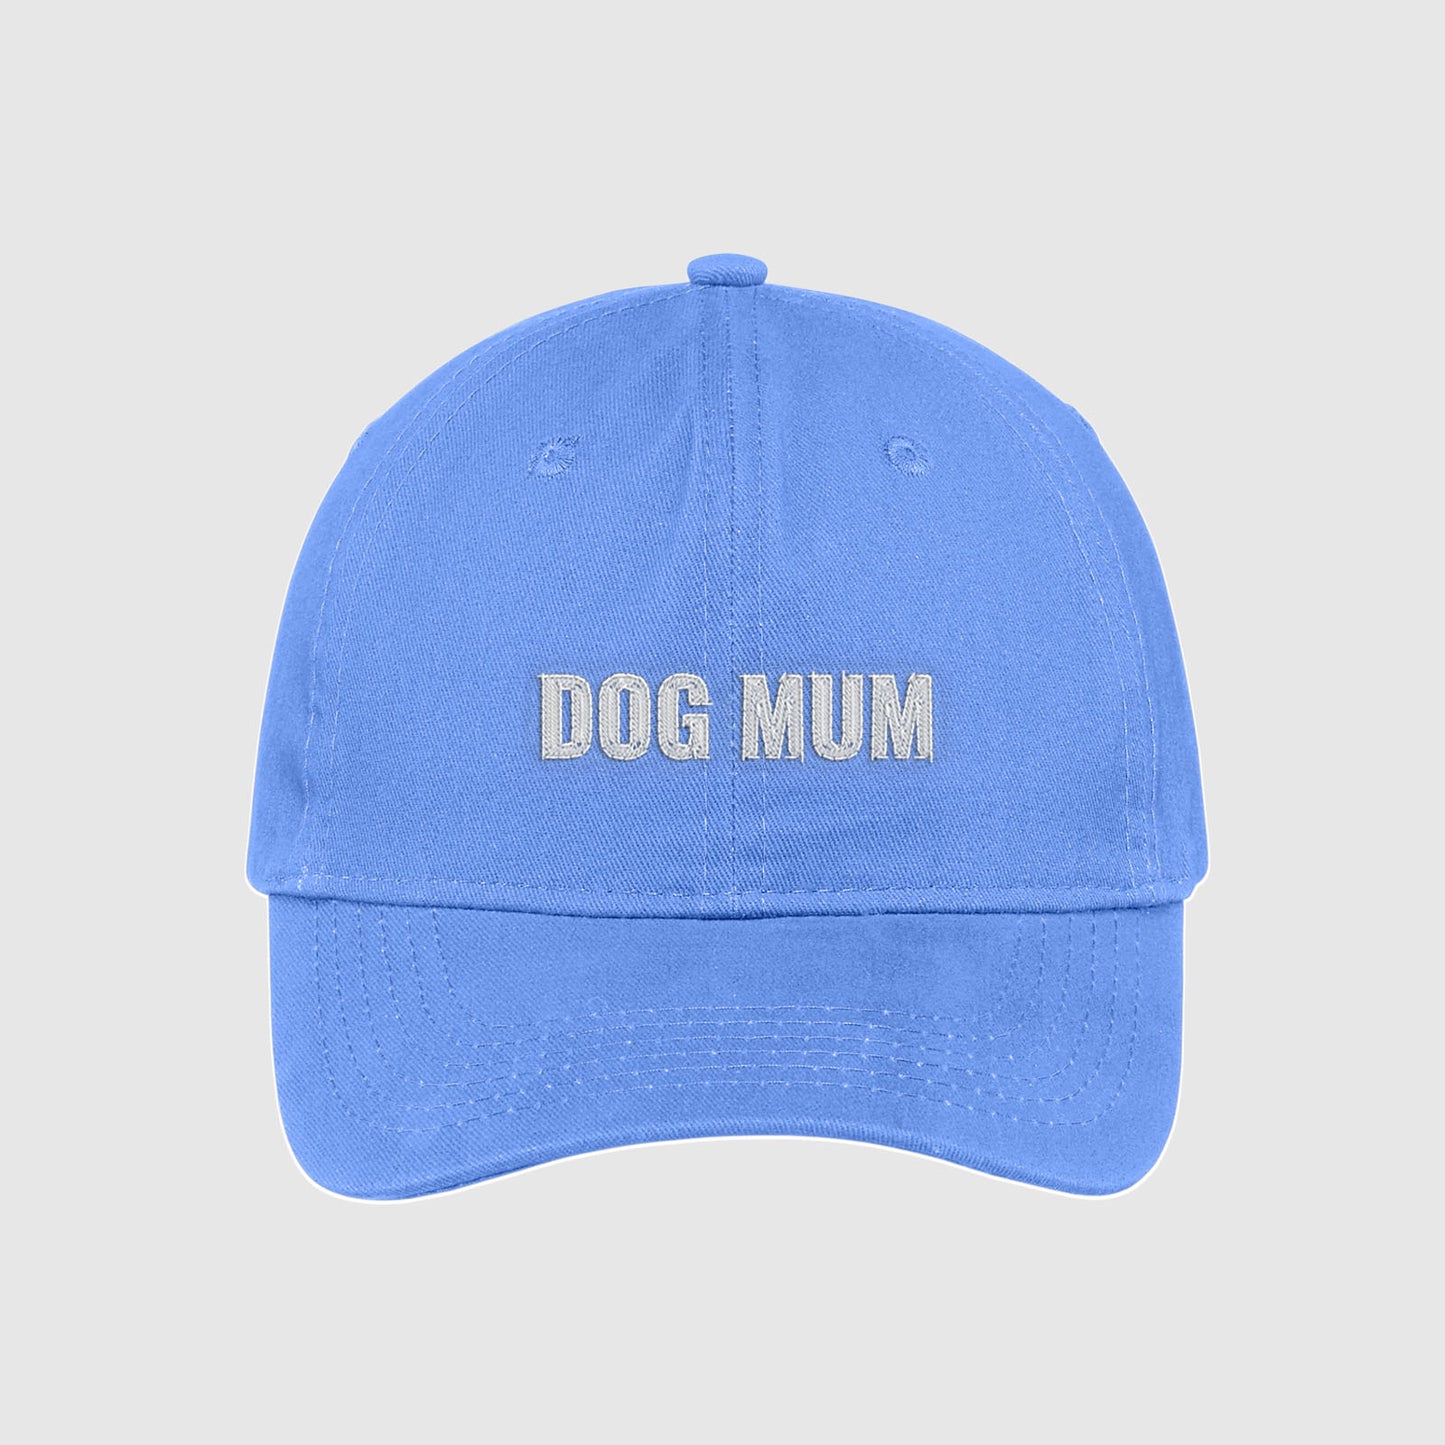 Carolina Blue Dog Mum Hat embroidered with white text.